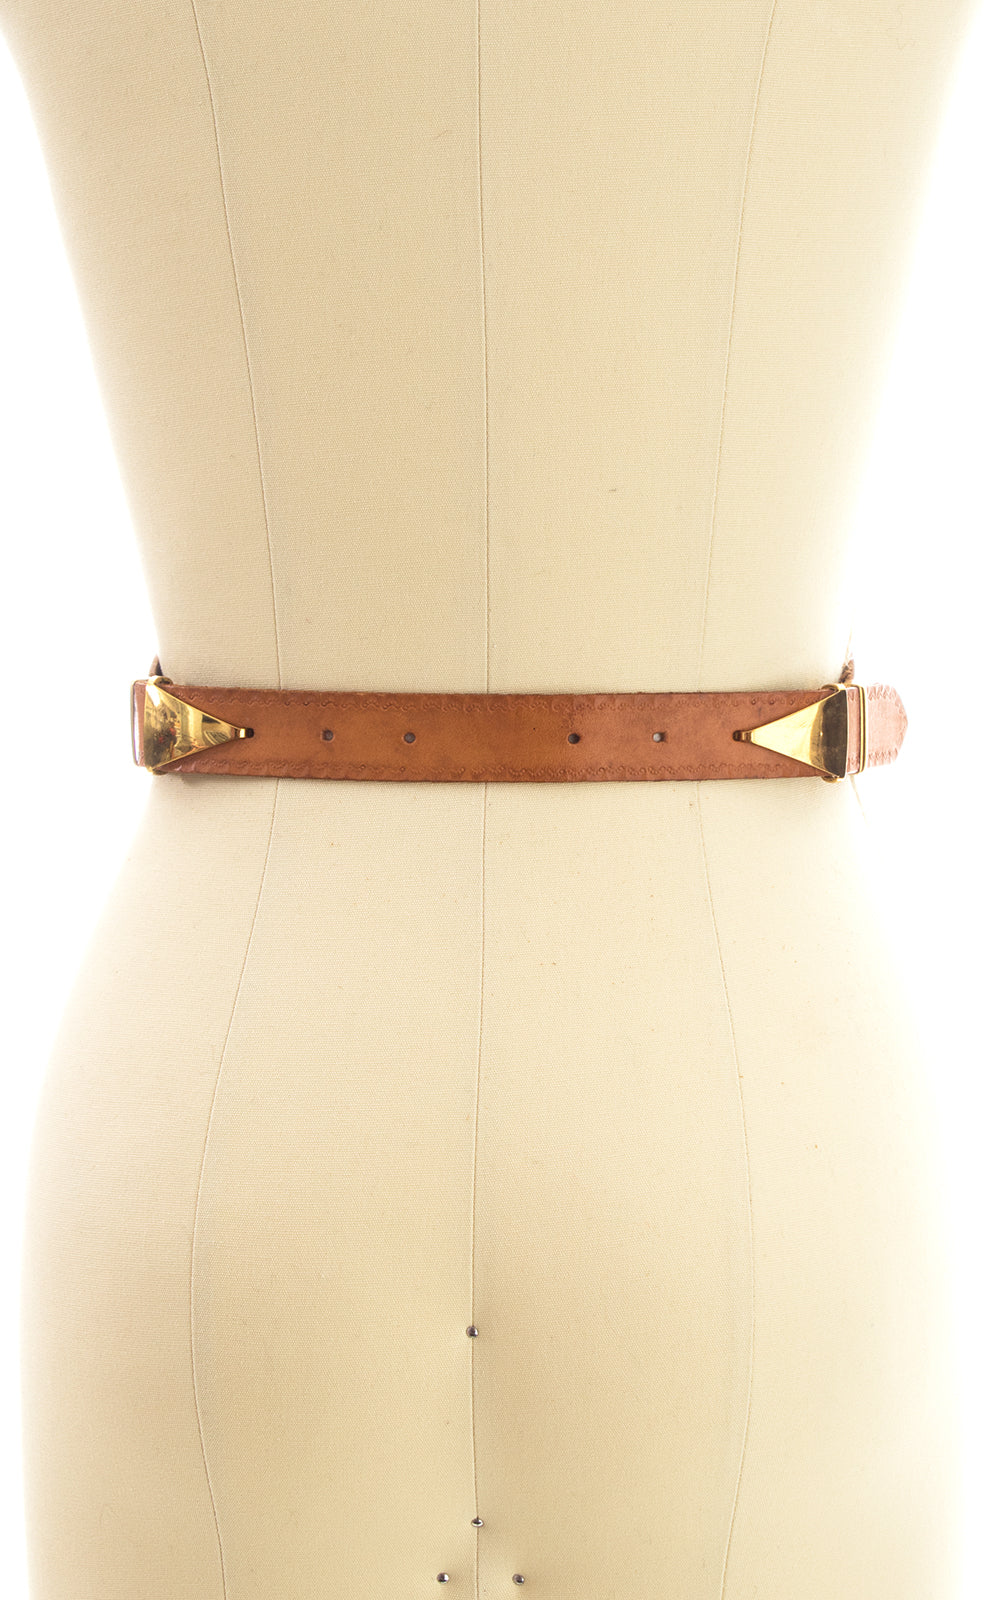 1970s Floral Tooled Leather Cinch Belt